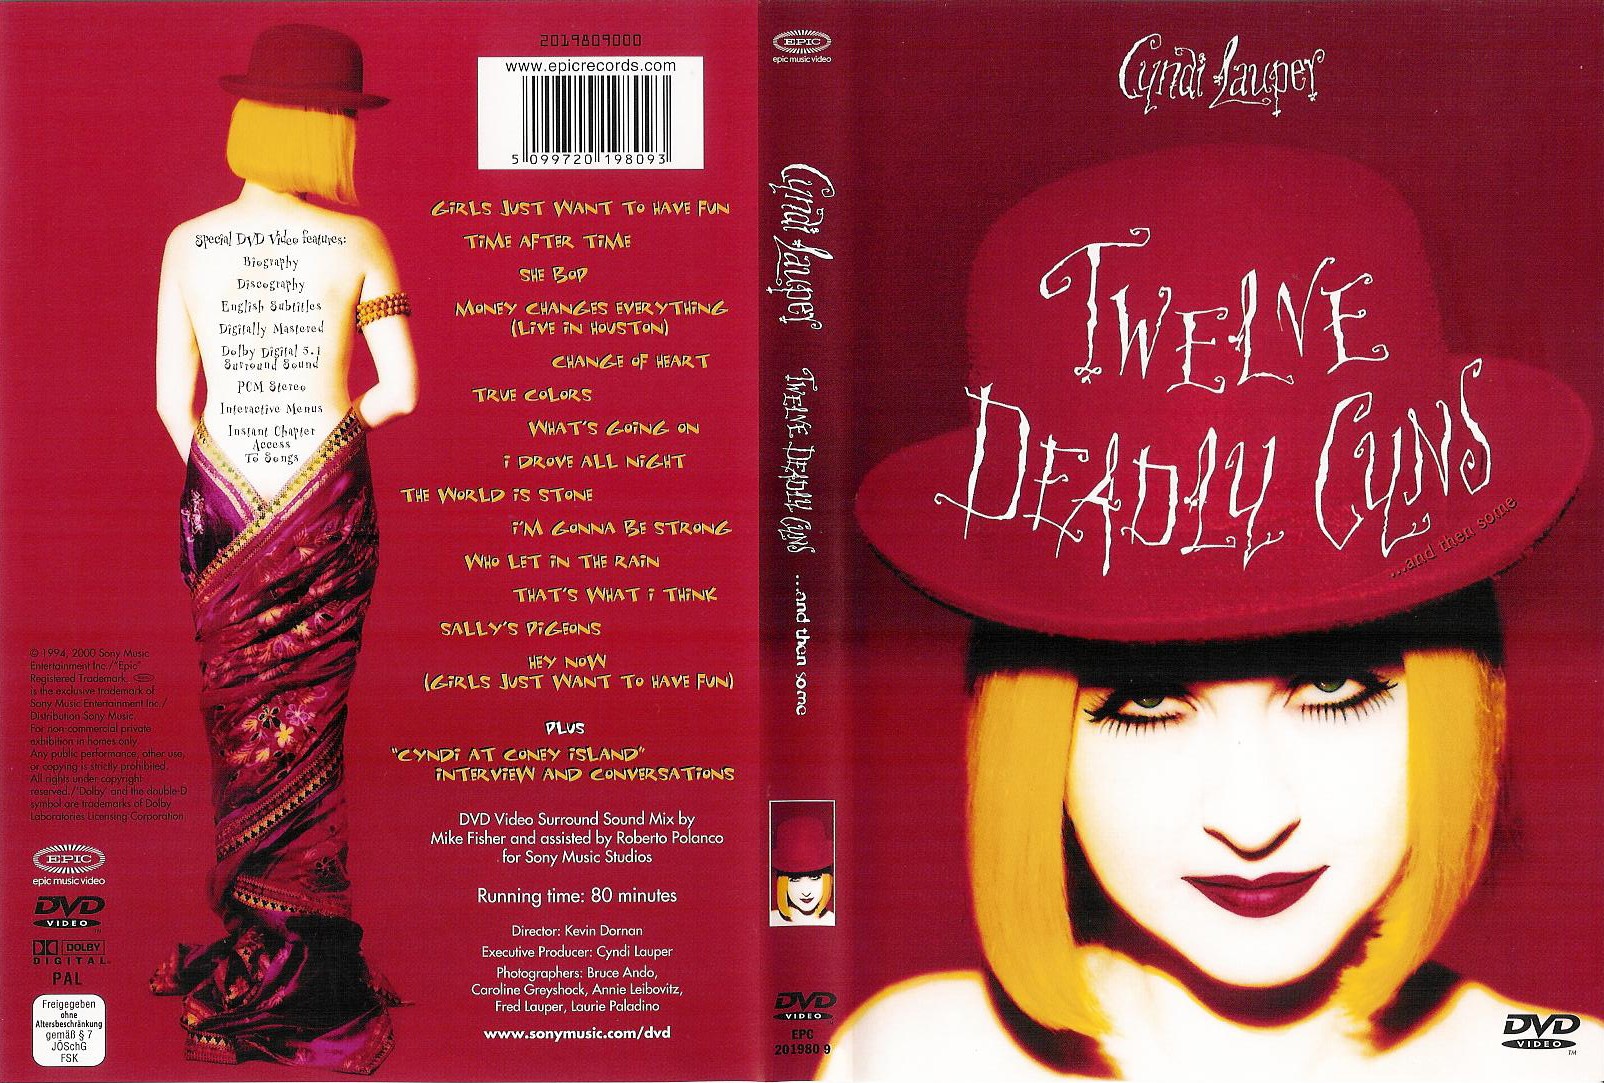 Jaquette DVD Cyndi Lauper twelve deadly cyns